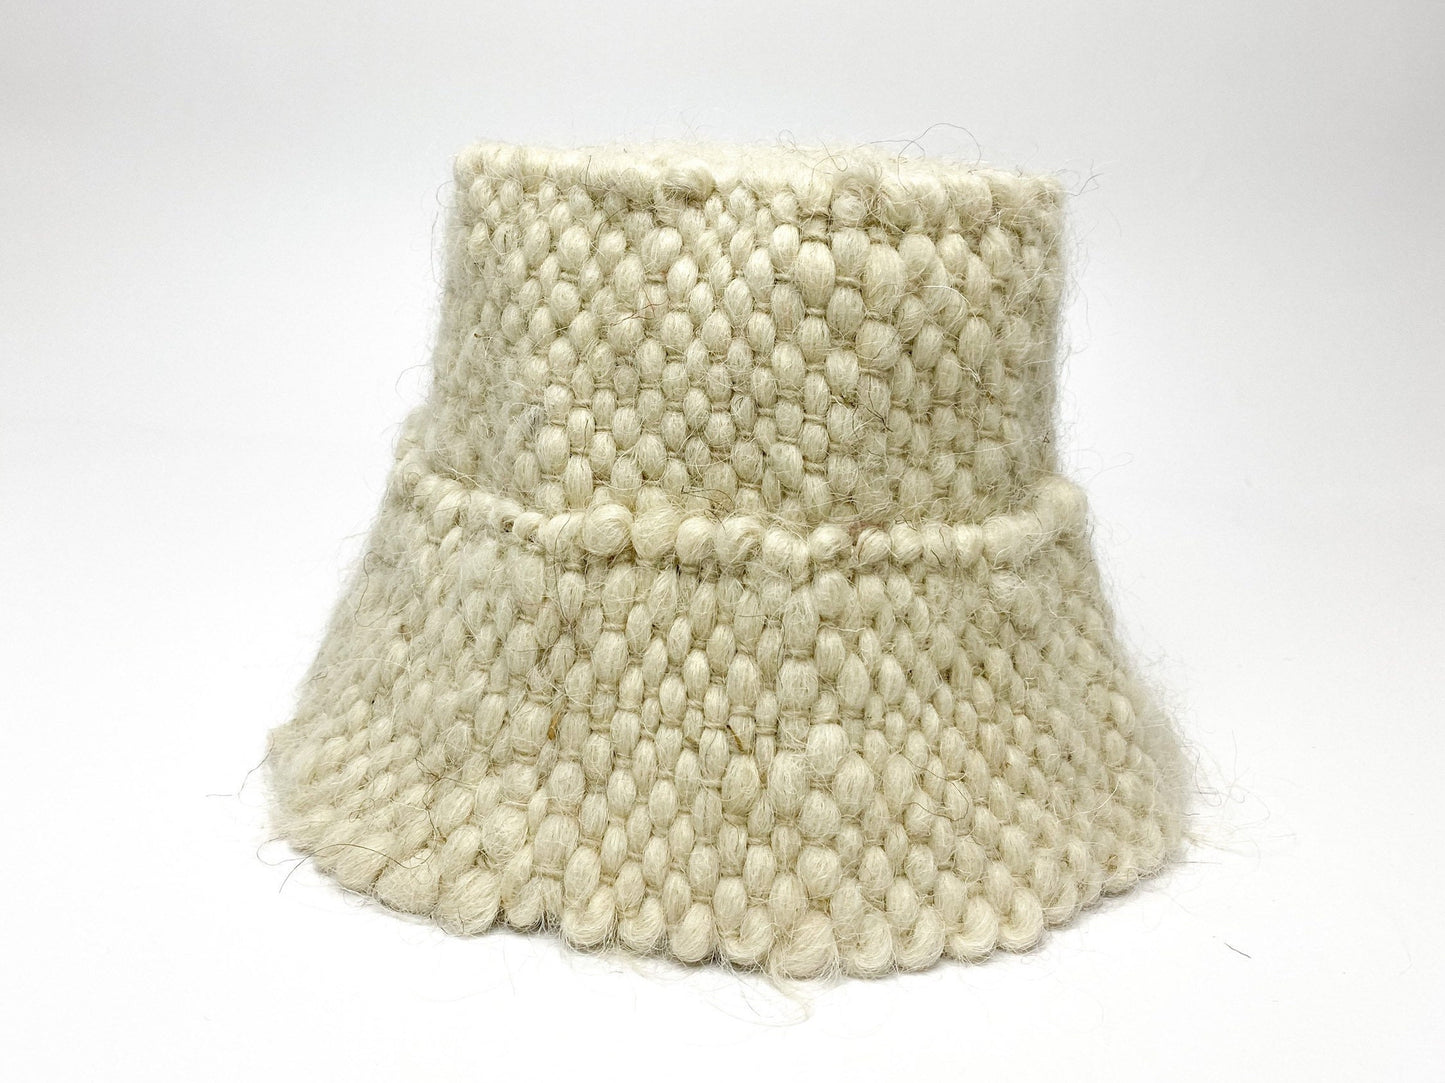 White wool hat